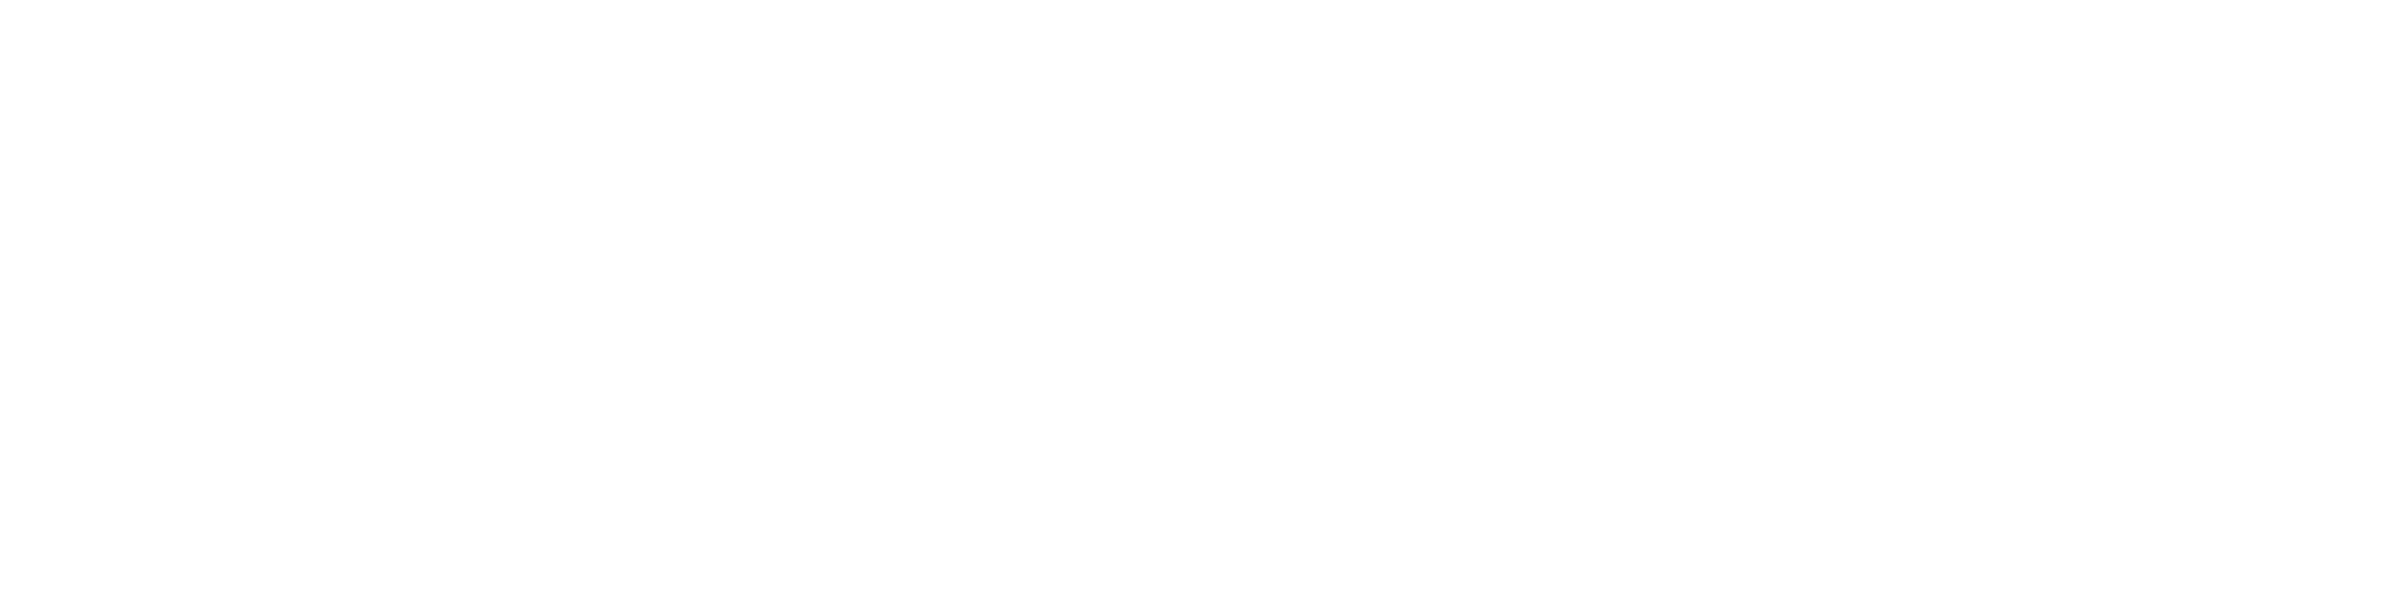 ZOCCAM Logo White